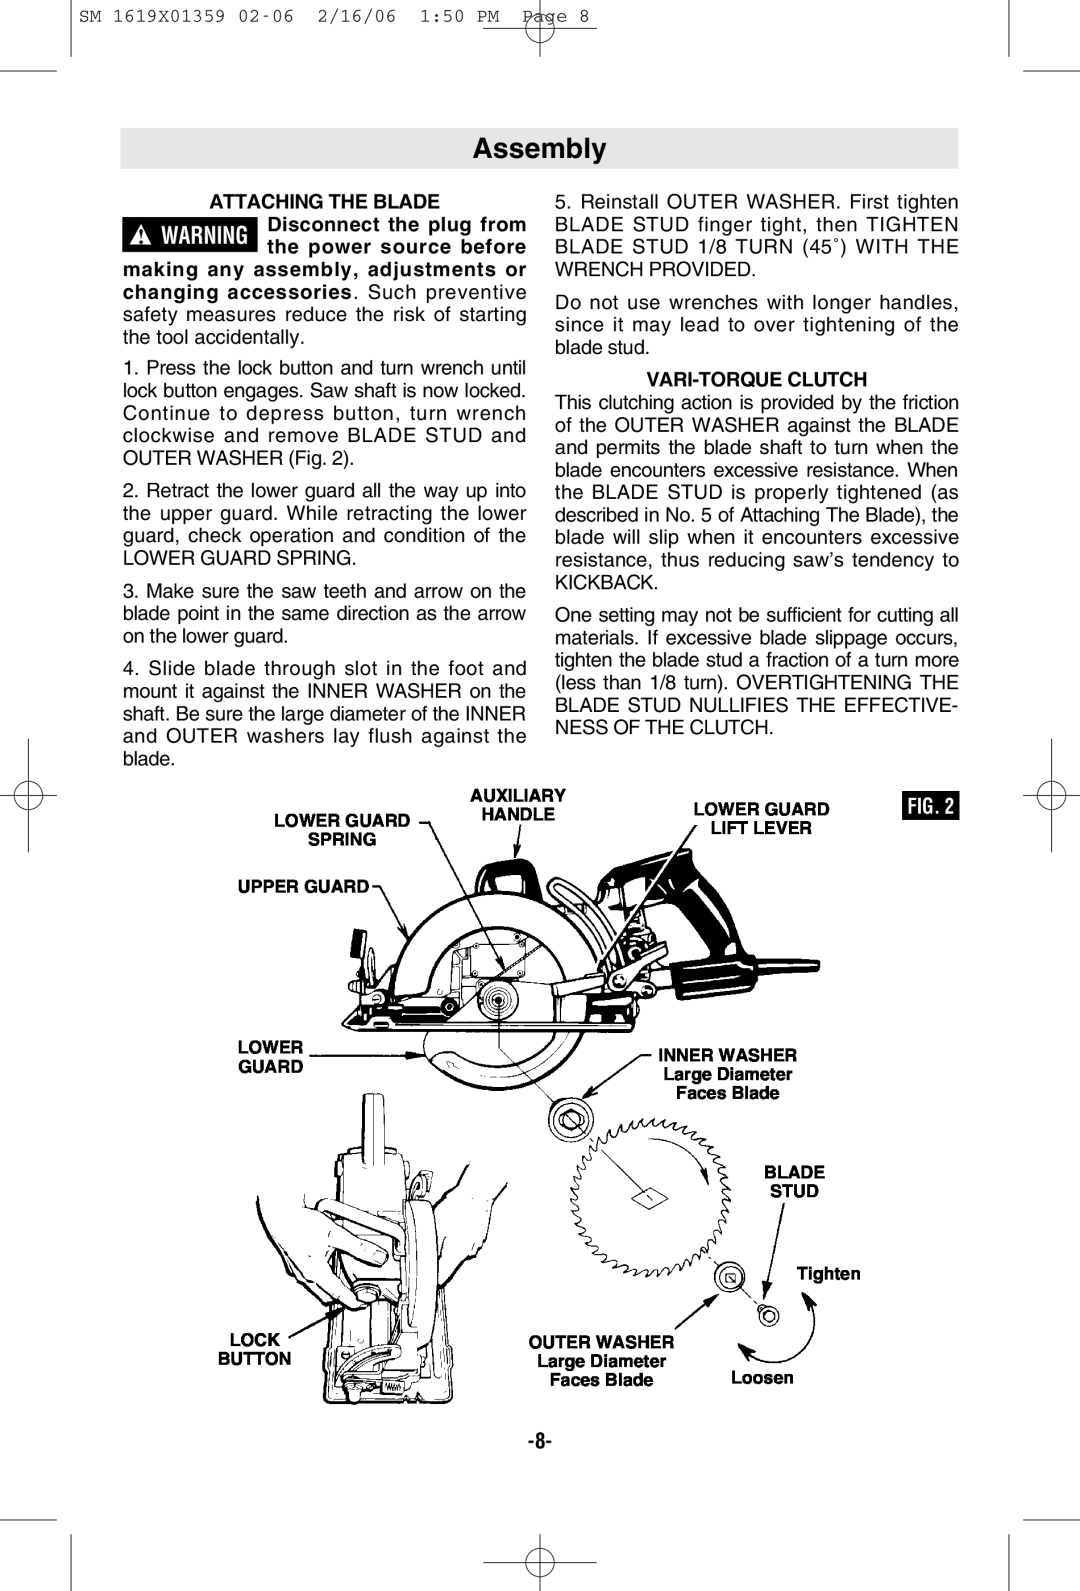 Skil HD5860 manual Assembly, Attaching The Blade, Vari-Torqueclutch 